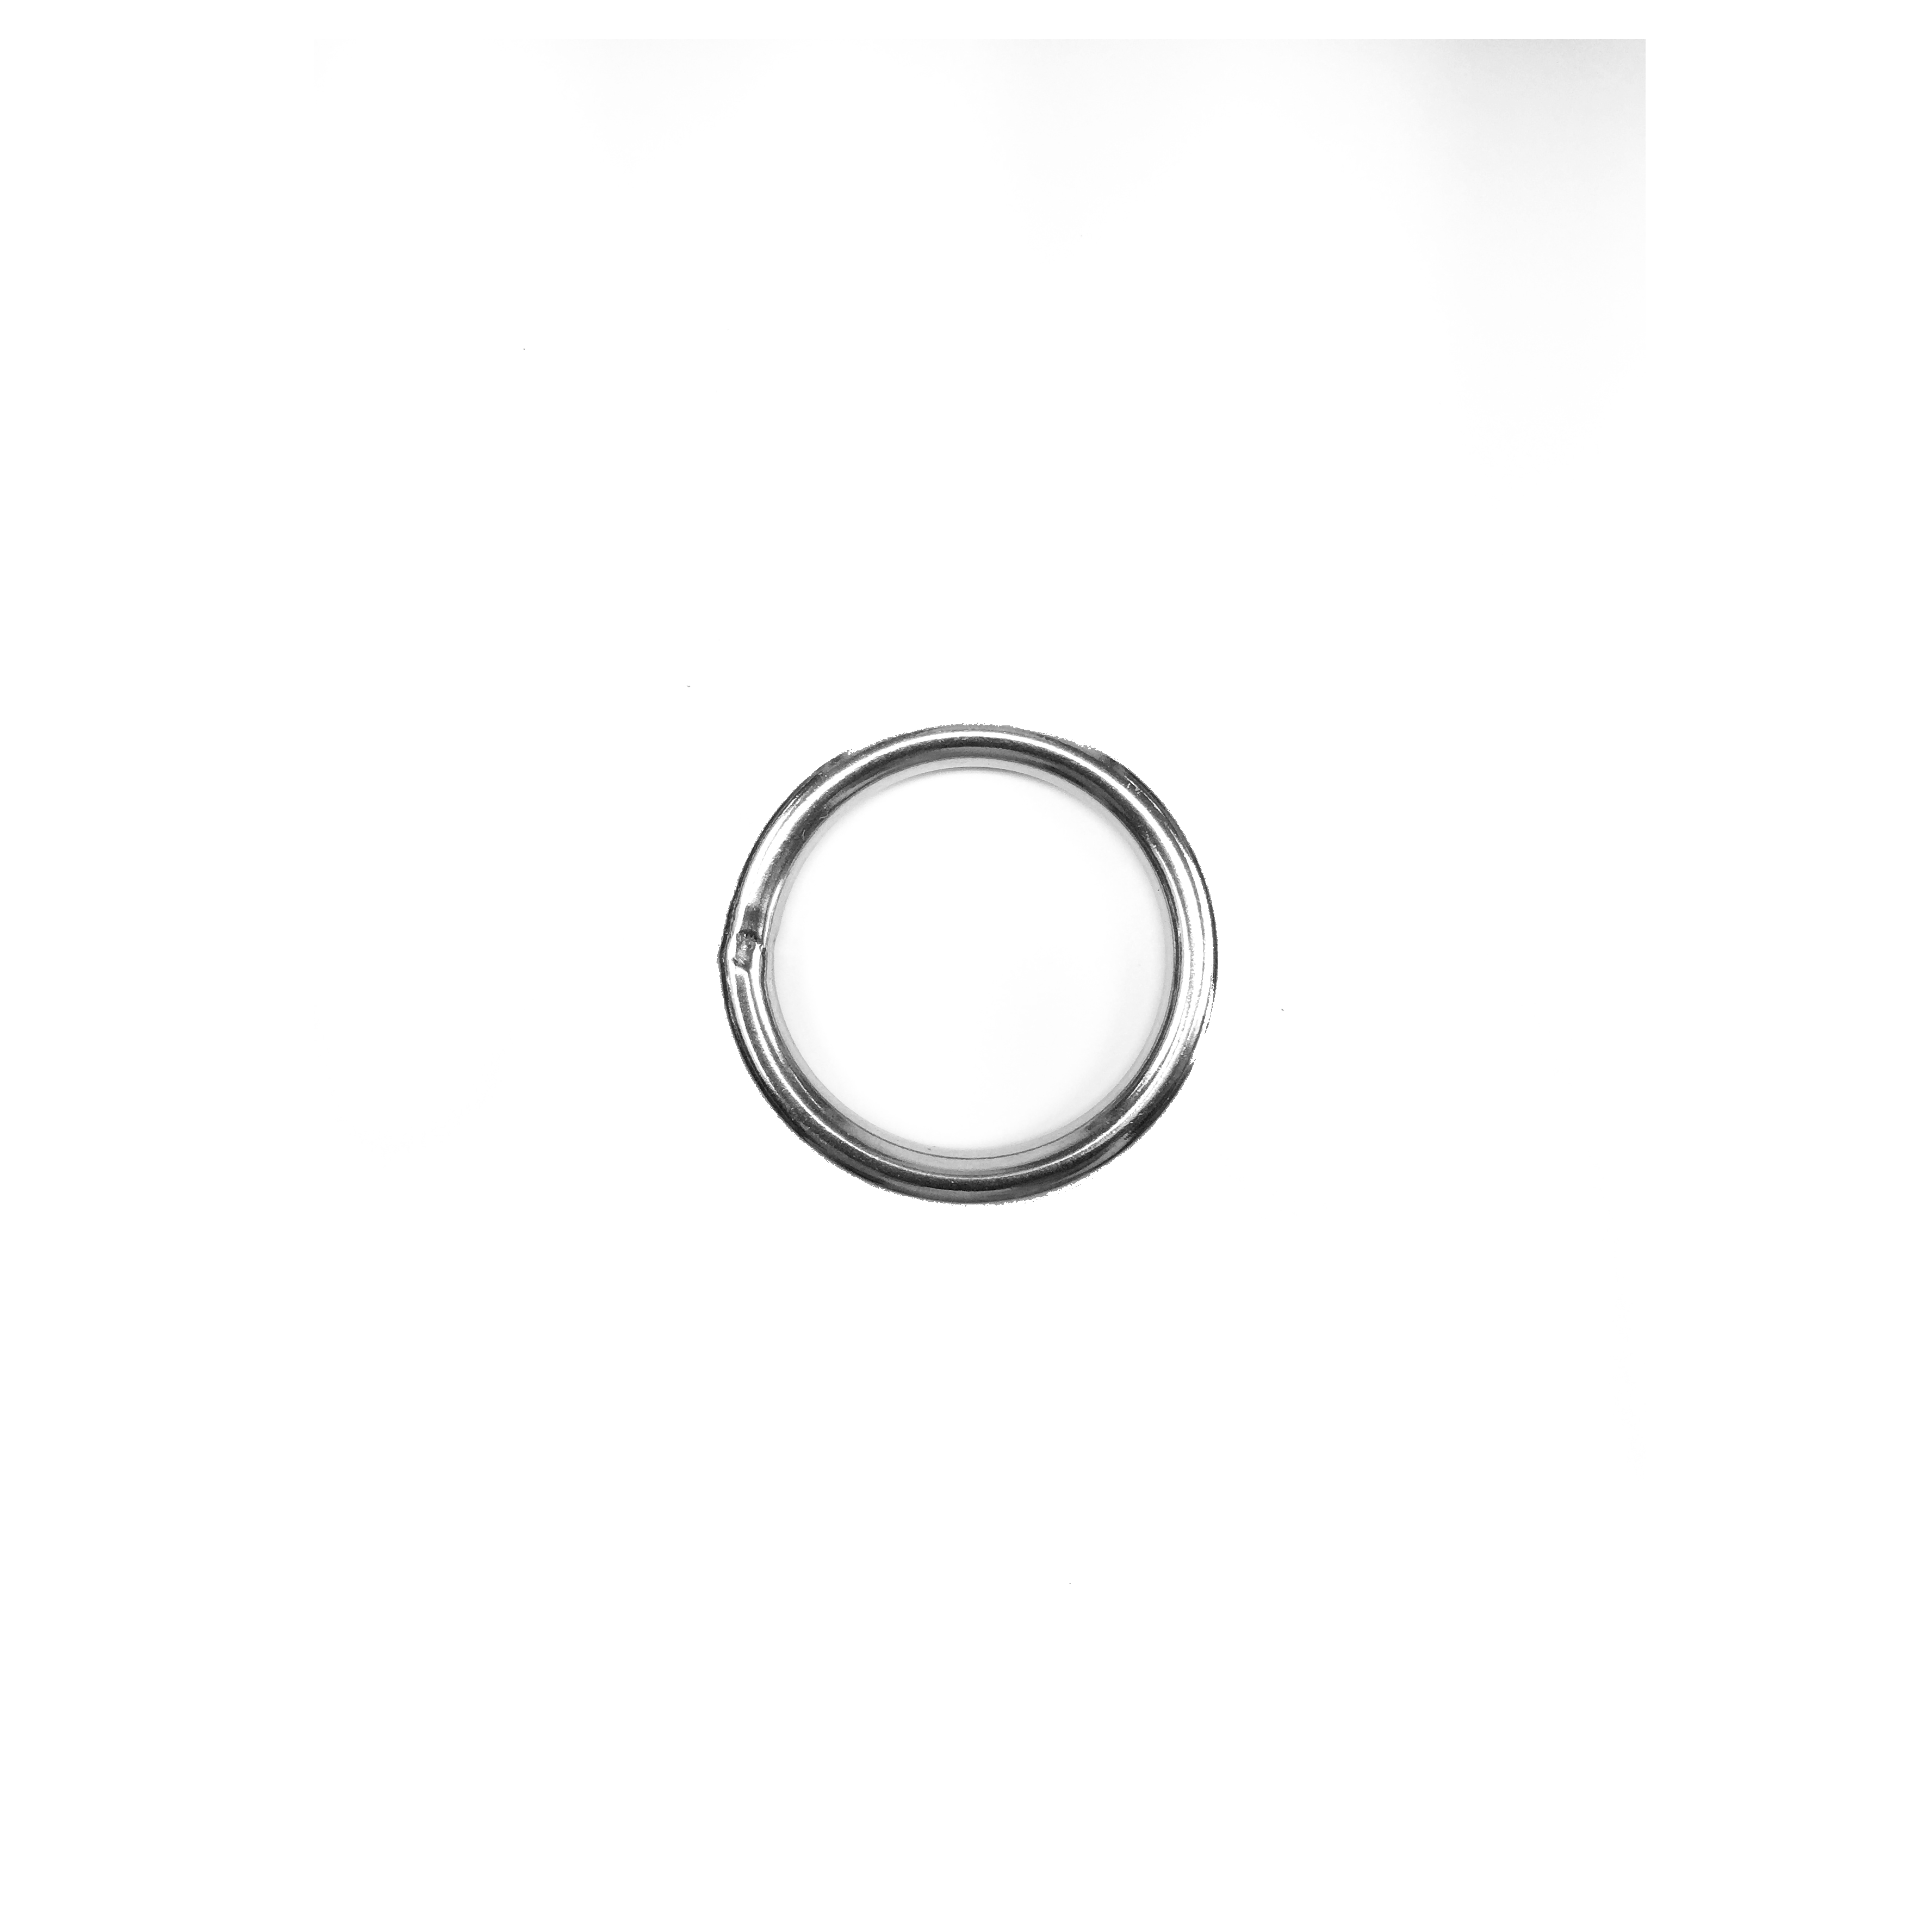 Ring geschweisst Edelstahl Innen- 19 mm, Draht  3.8 mm